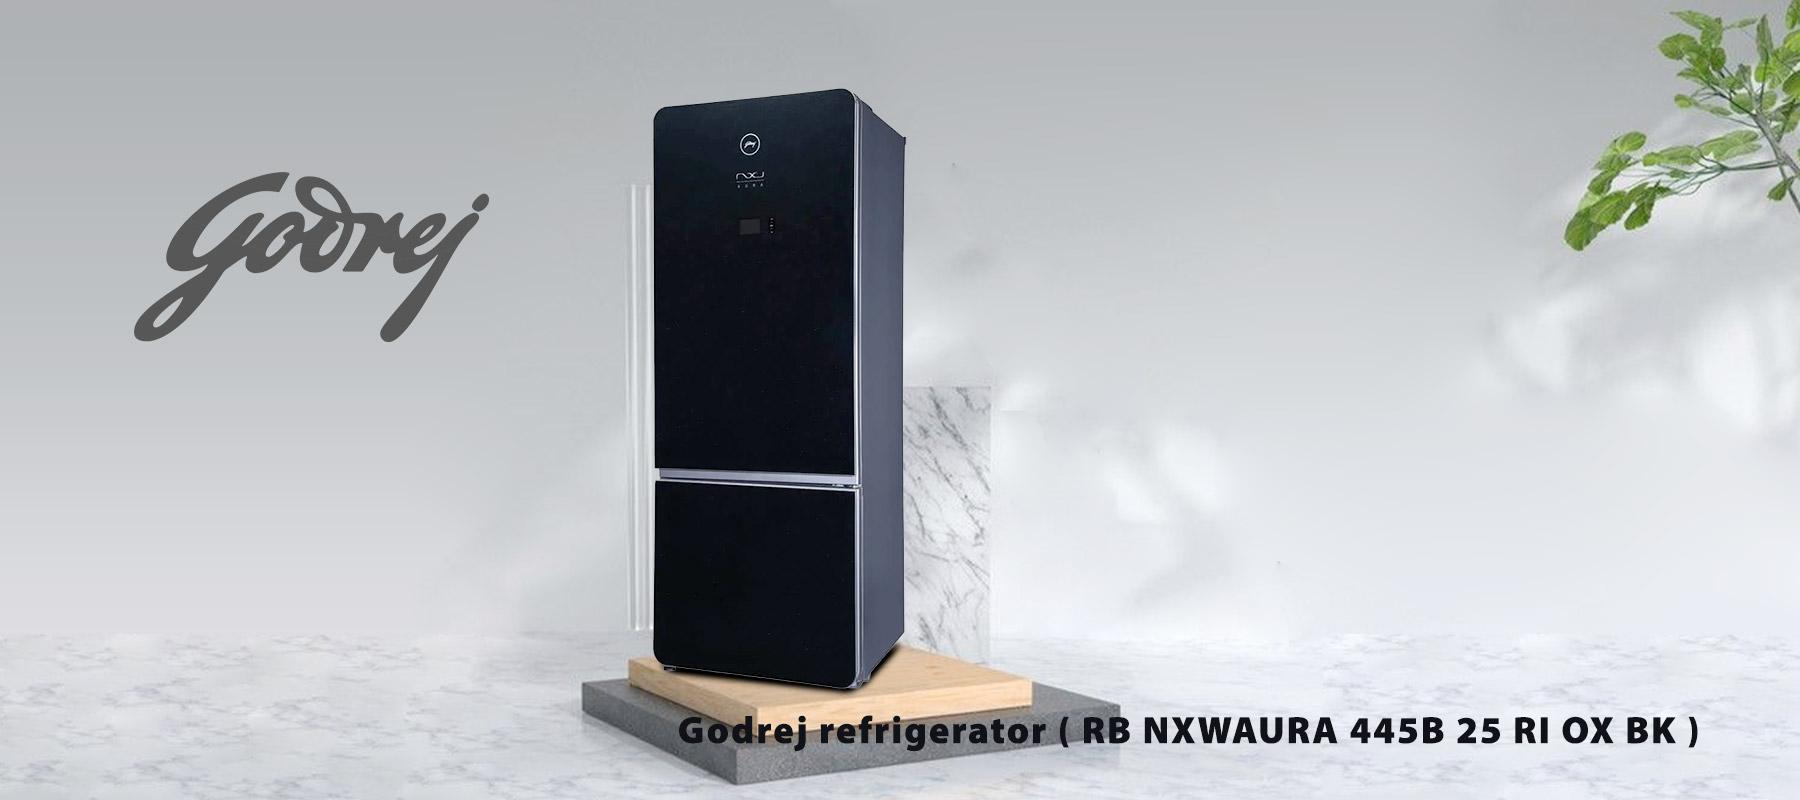 Godrej-refrigerator-(-RB-NXWAURA-445B-25-RI-OX-BK-).jpg